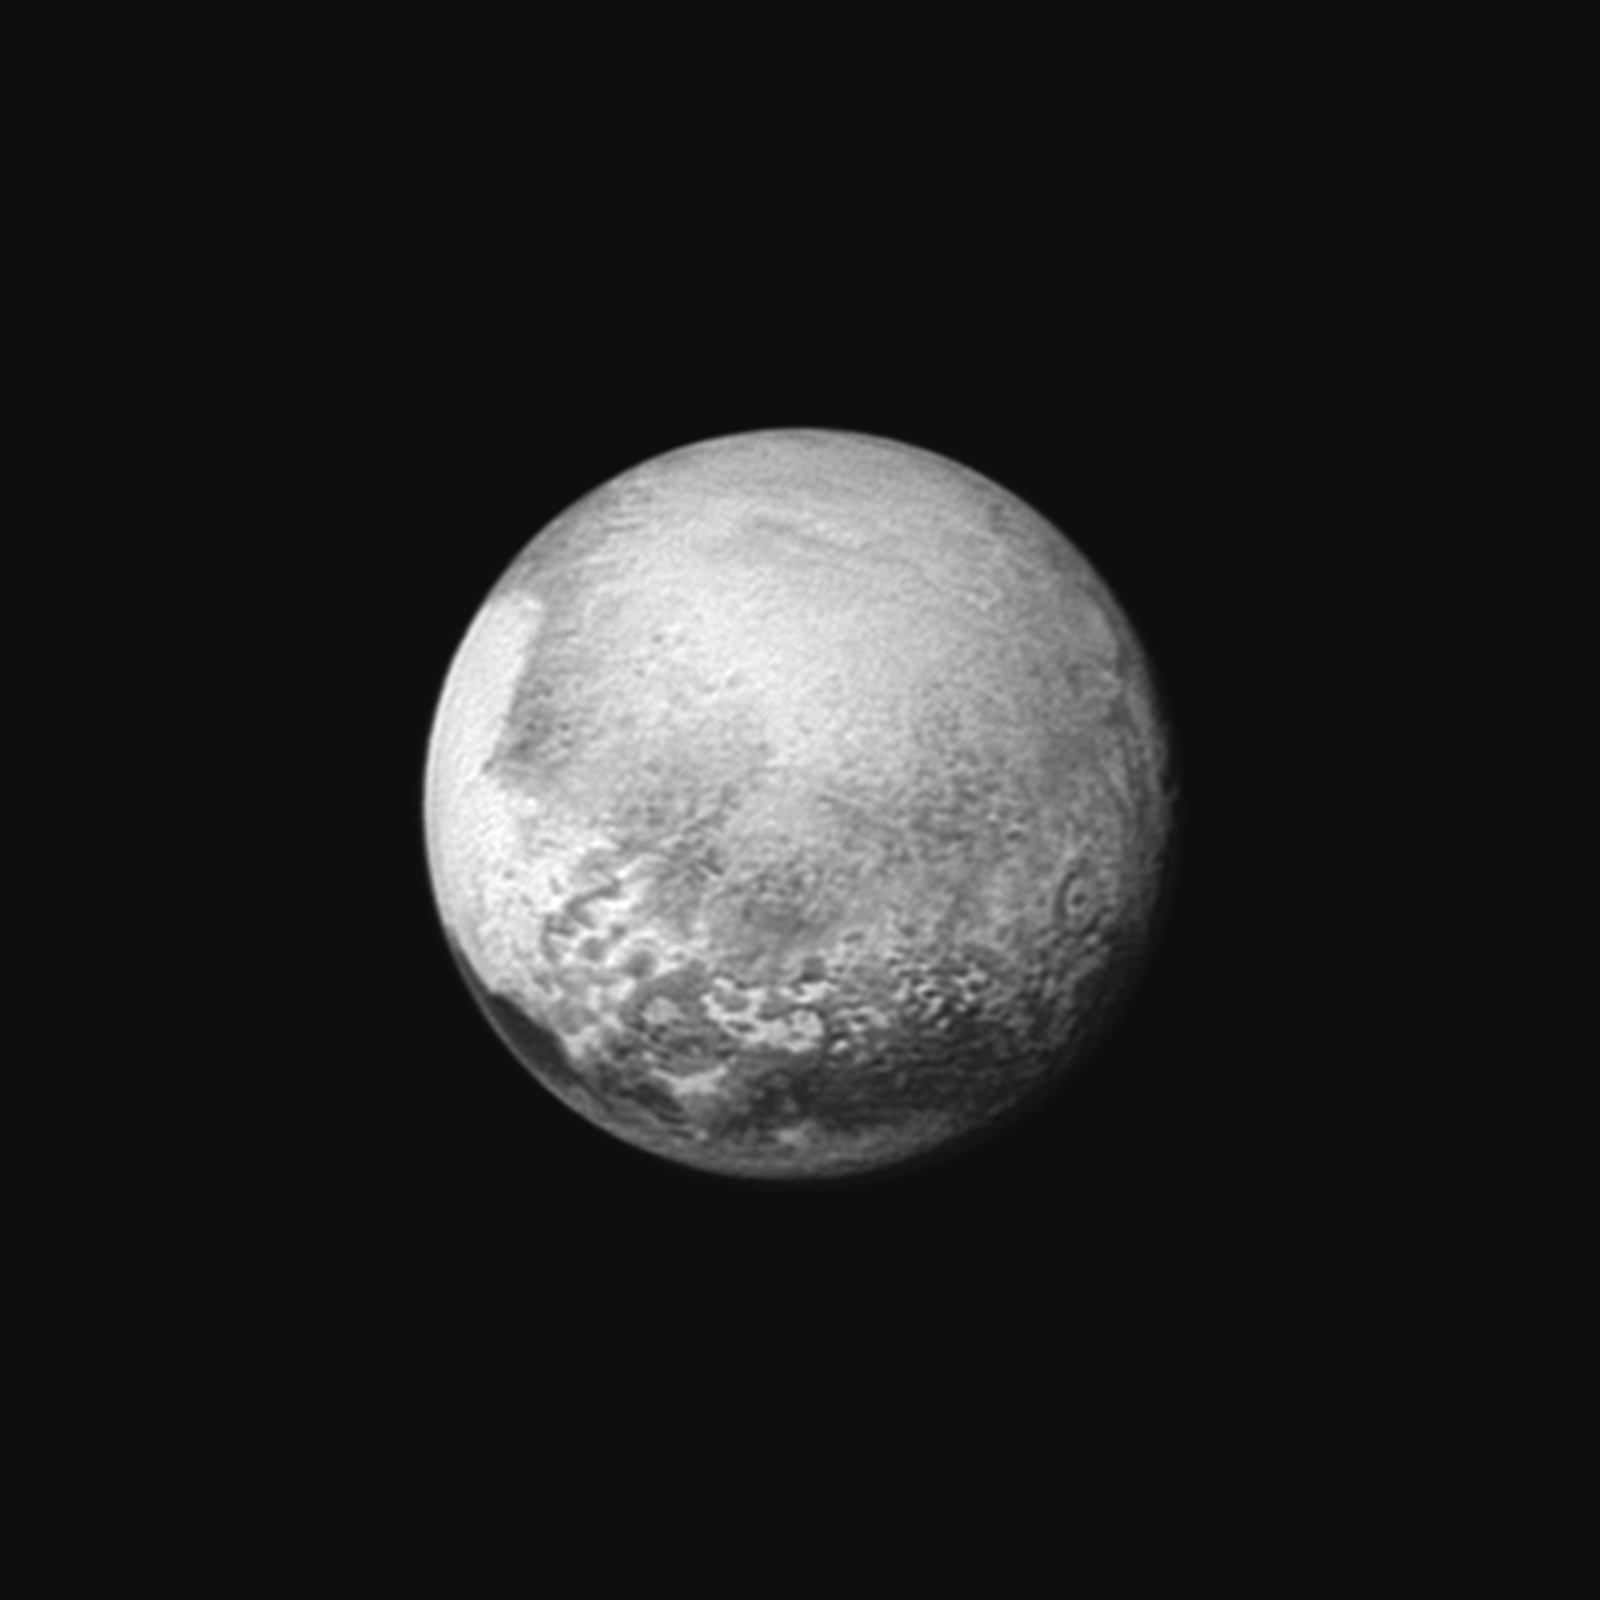 7-13-15_Pluto_image_NASA-JHUAPL-SWRI.png